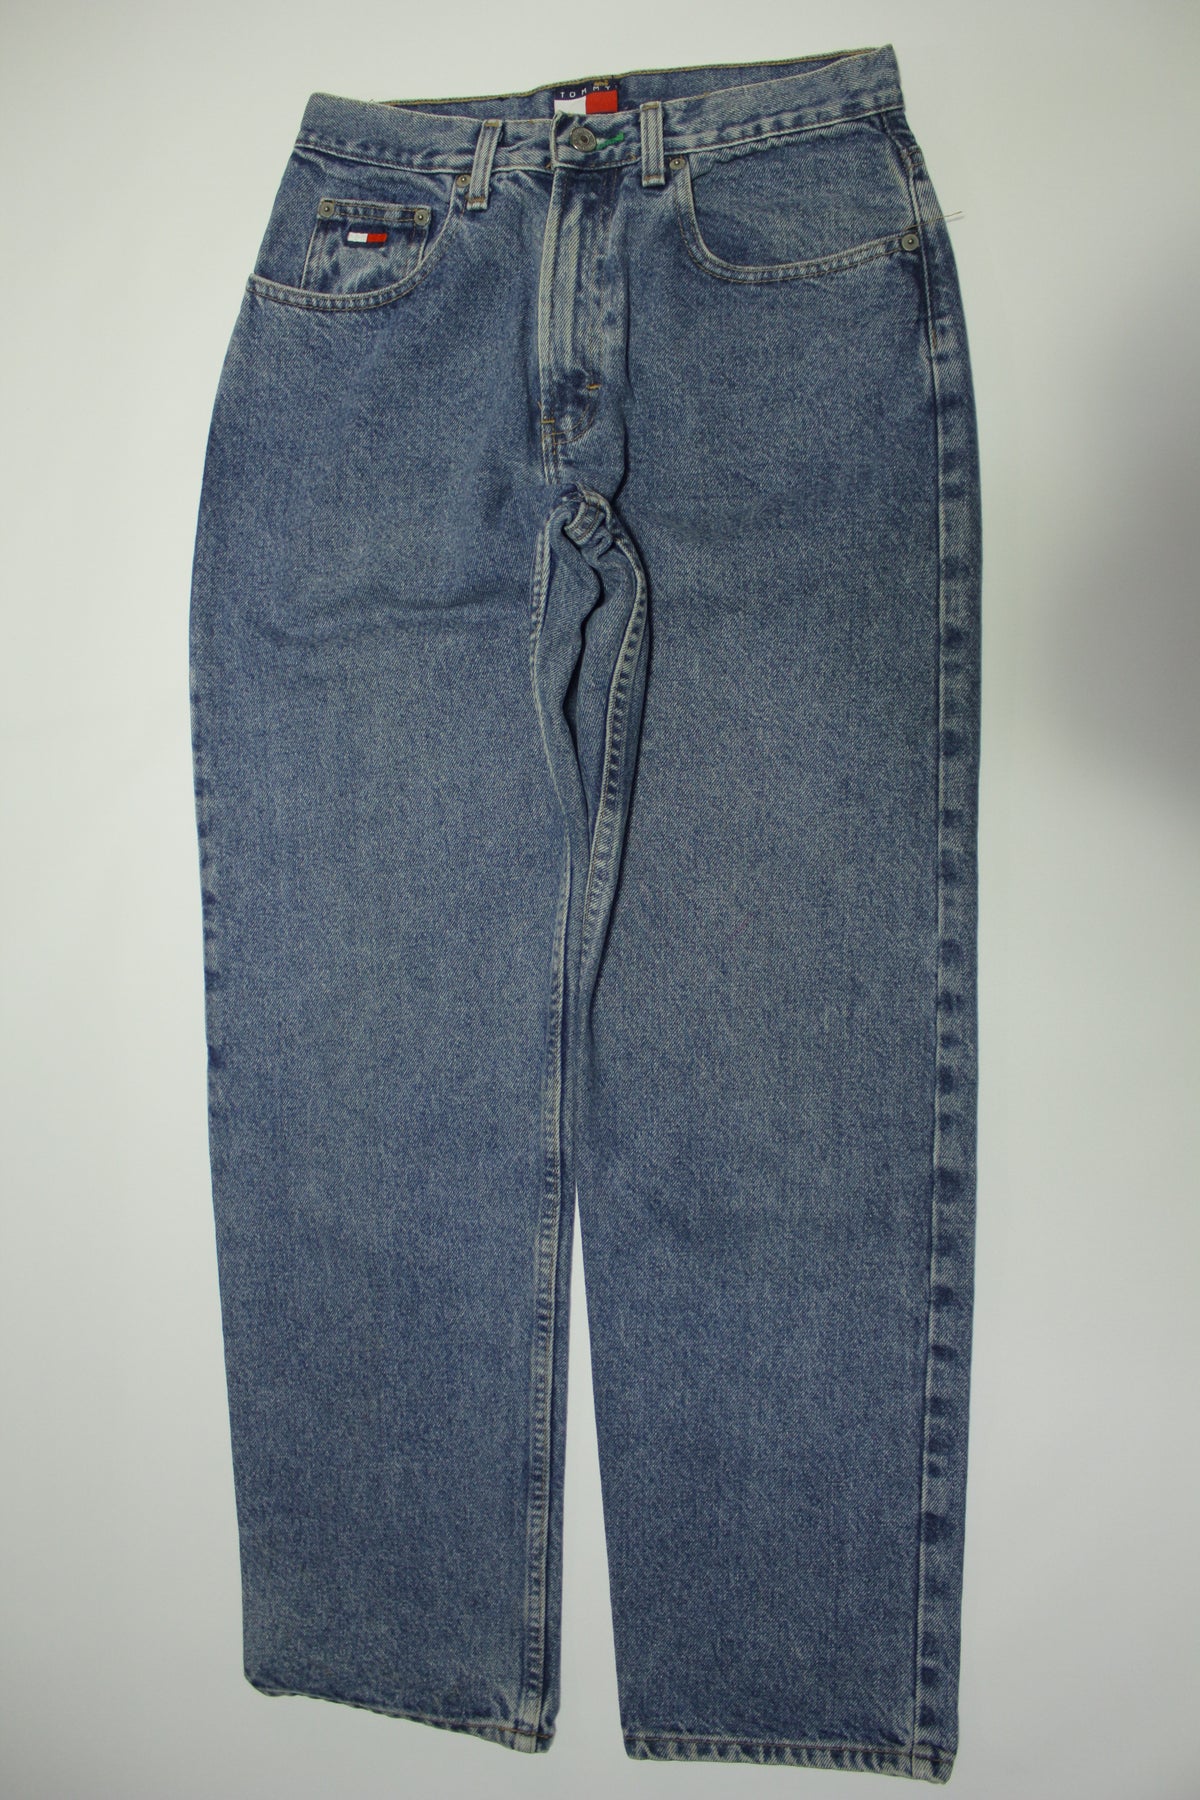 Tommy Hilfiger Vintages 90's Big Patch Tommy Star Jeans